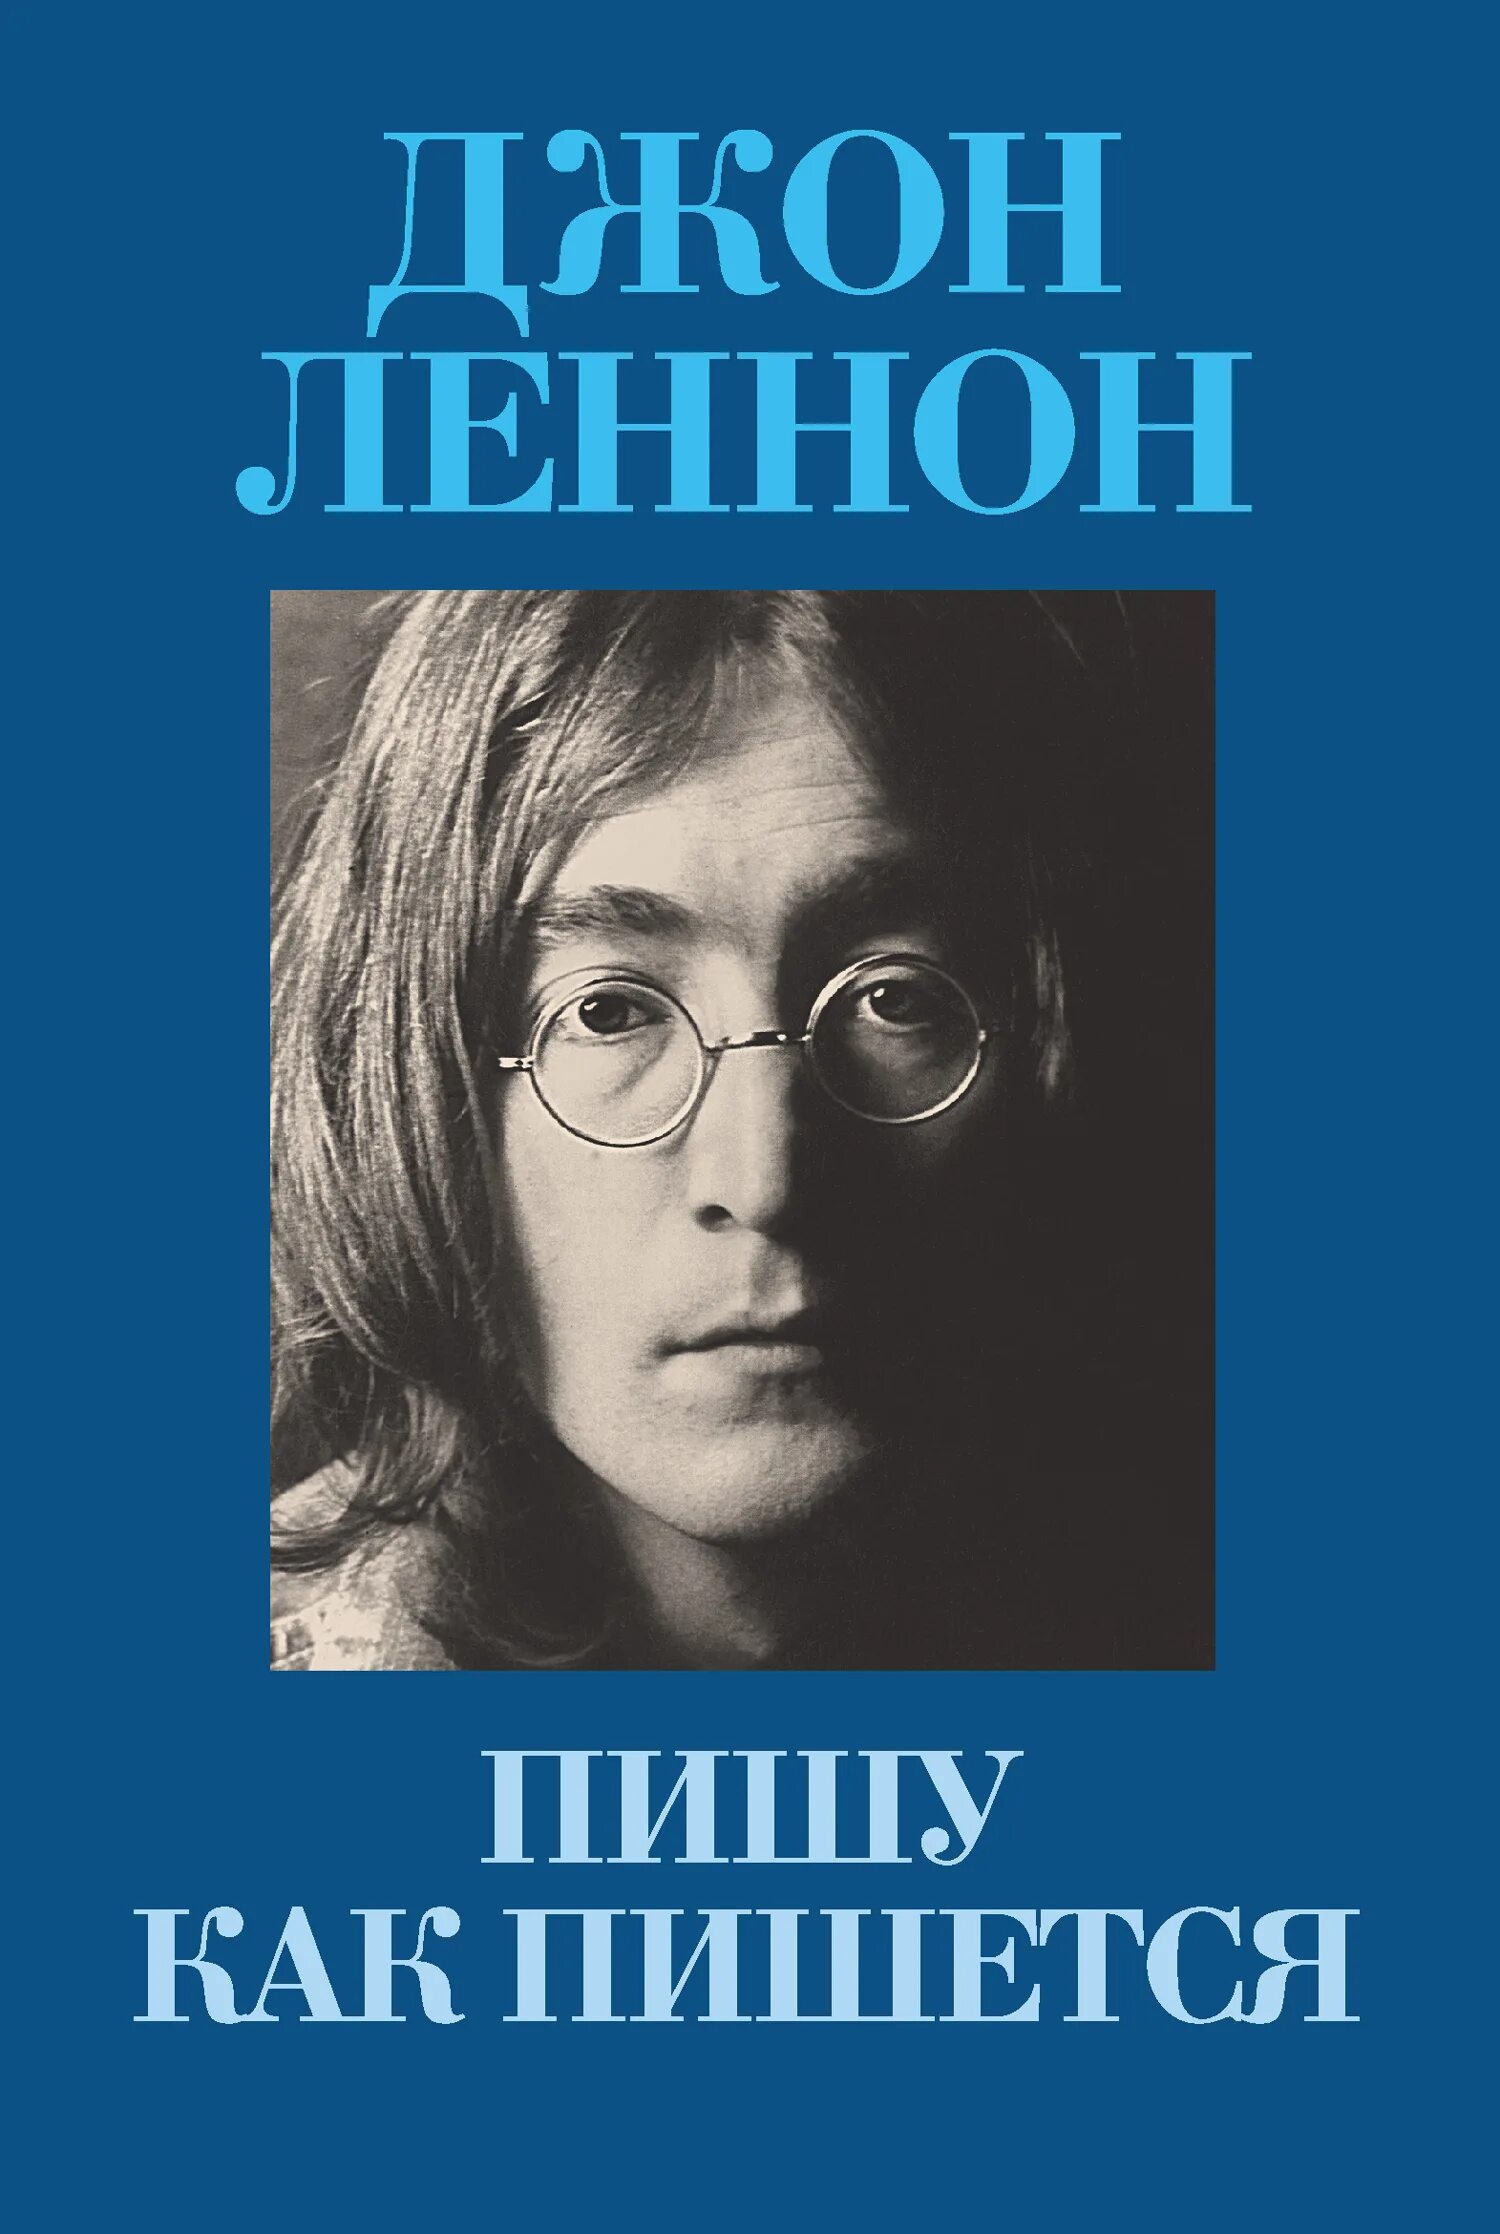 Джон леннон книги. In his own write Джон Леннон книга. Пишу как пишется Джон Леннон. Книги про Джона Леннона. Пишу как пишется Джон Леннон книга.